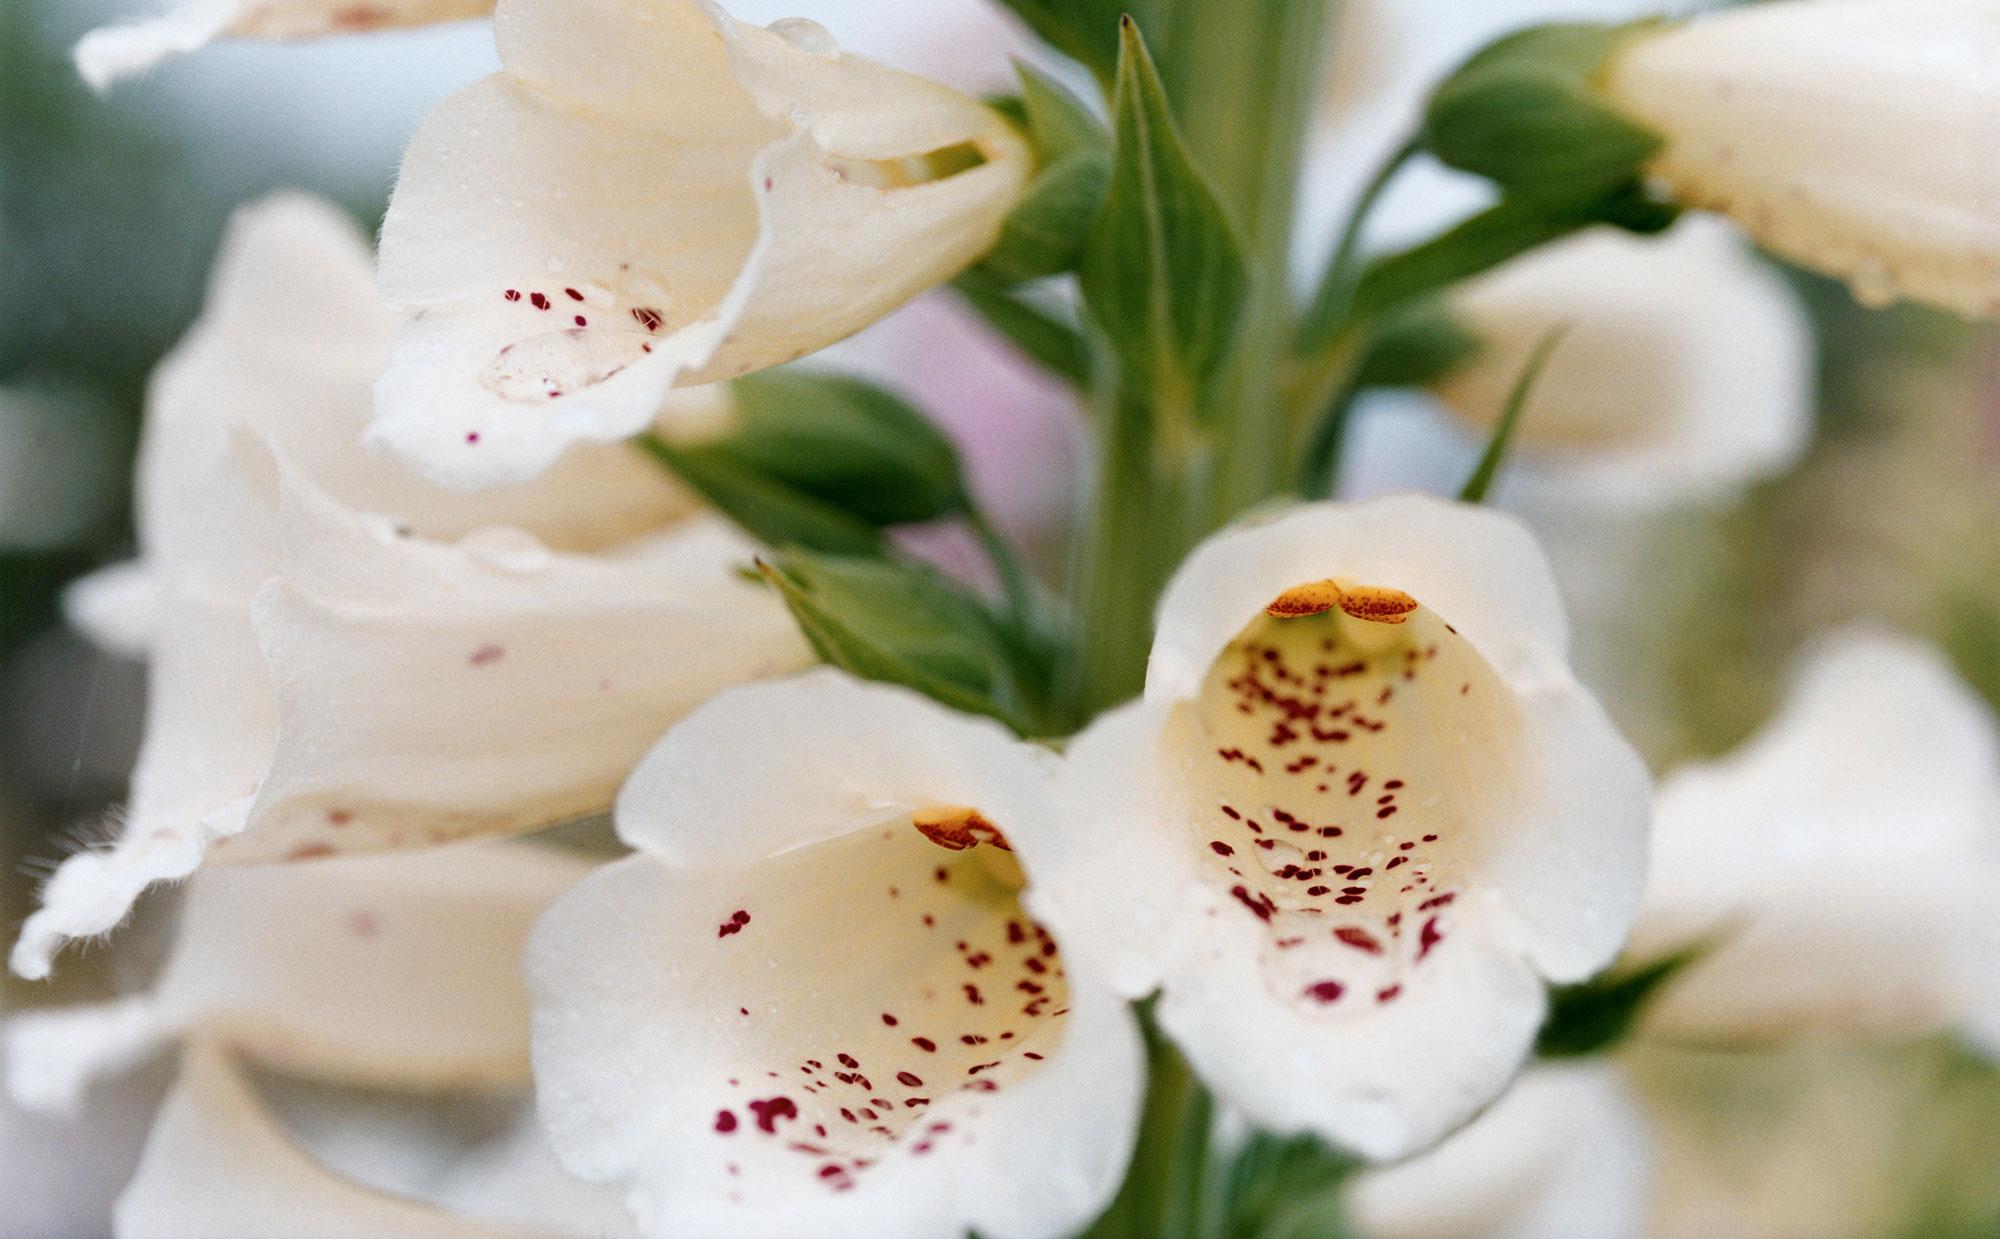 Amazing Rare White Flowers Images - Wedding and flowers ispiration ...